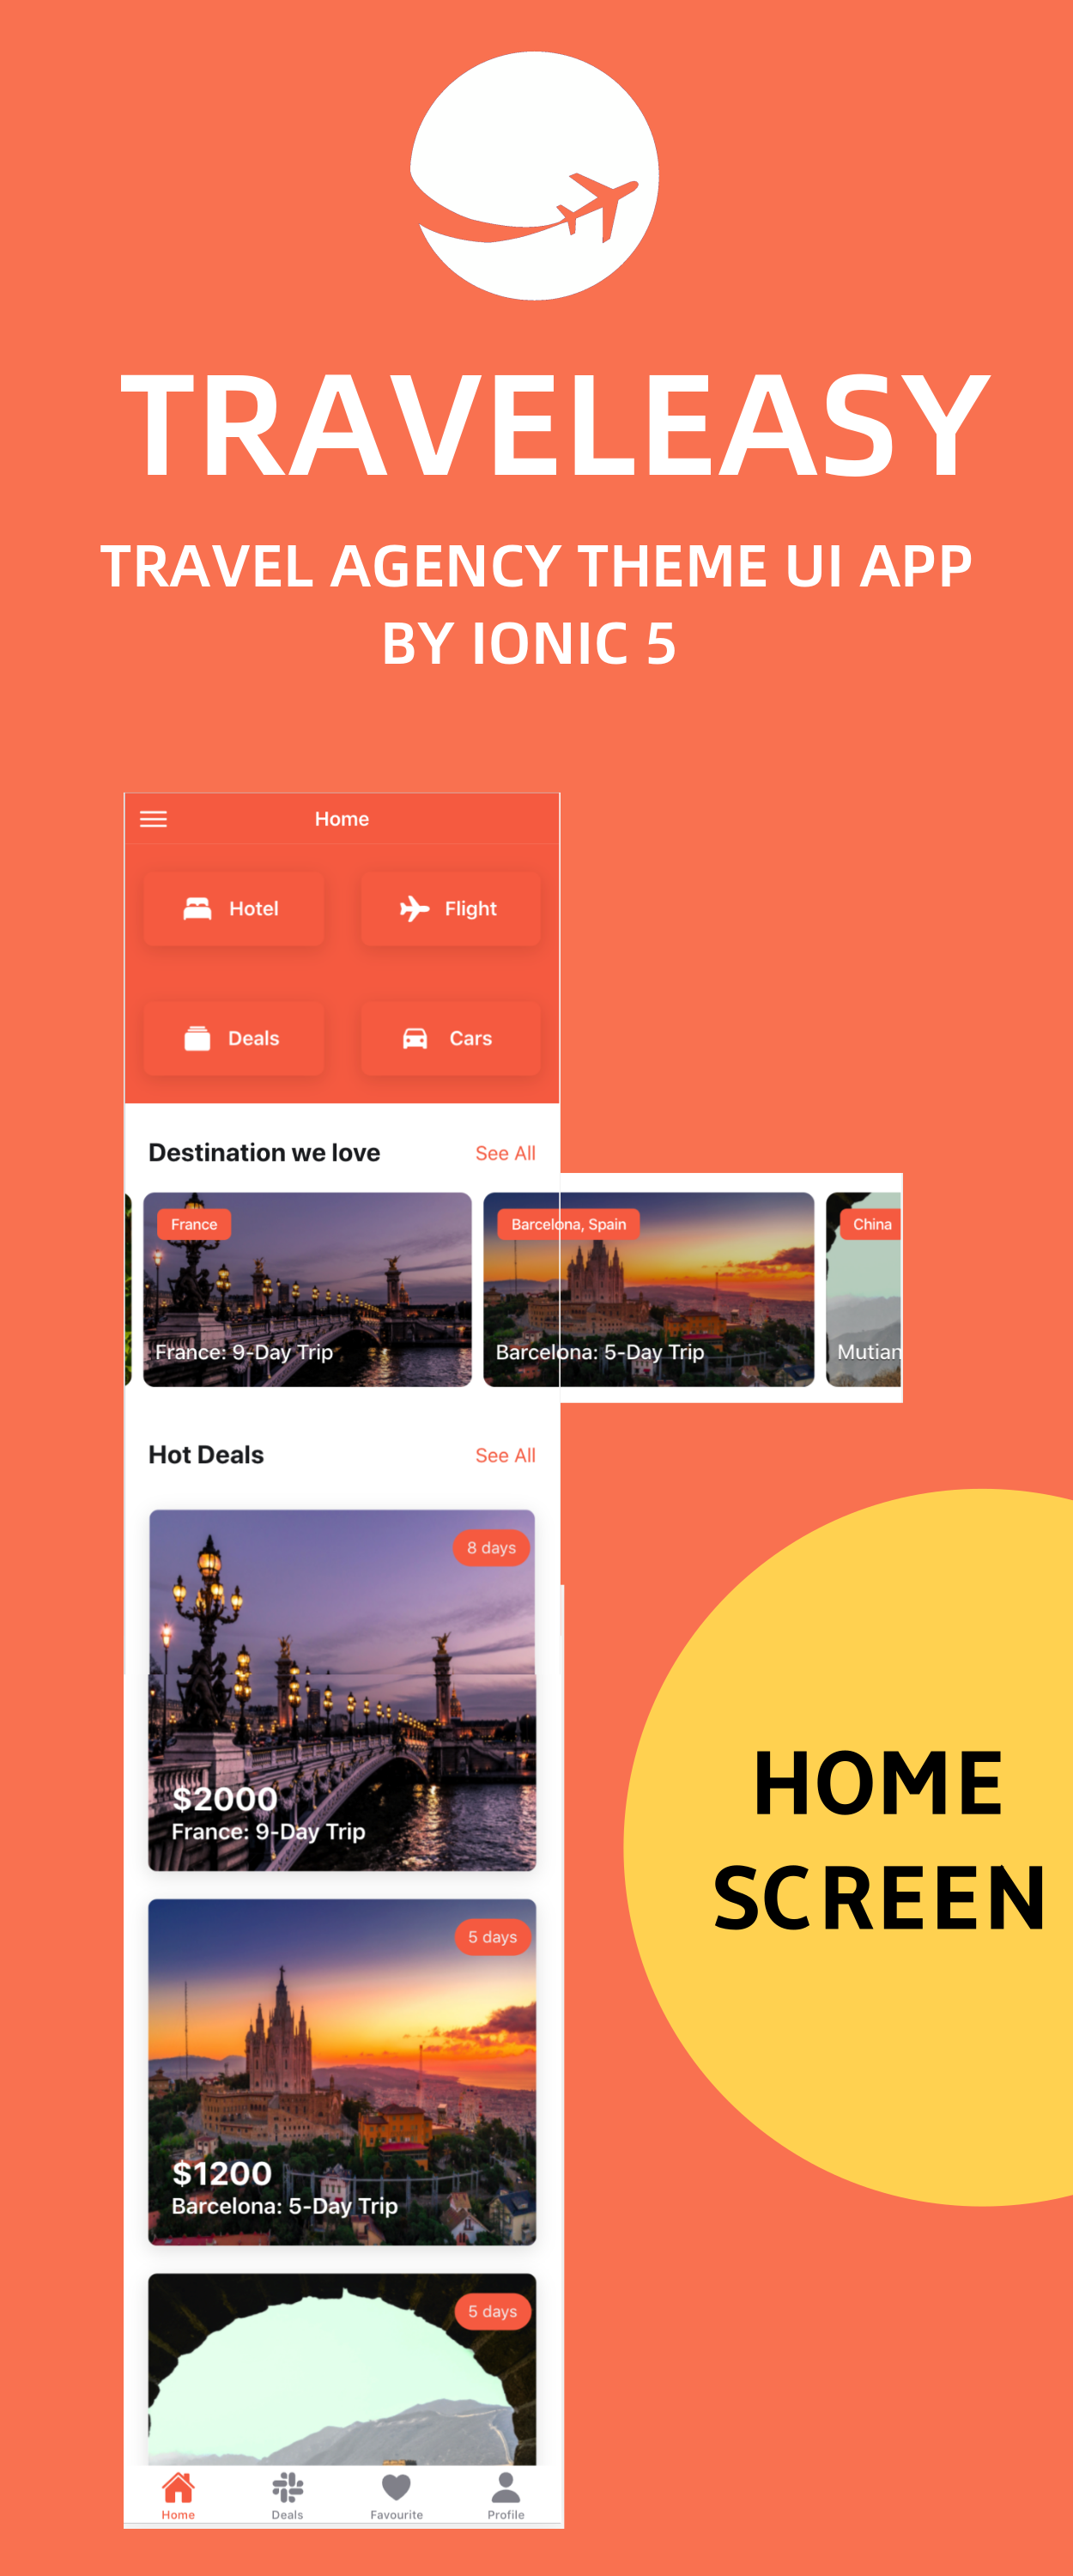 TravelEasy - A Travel Agency Theme UI App By Ionic 5 (Car, Hotel, Flight Booking) - 2